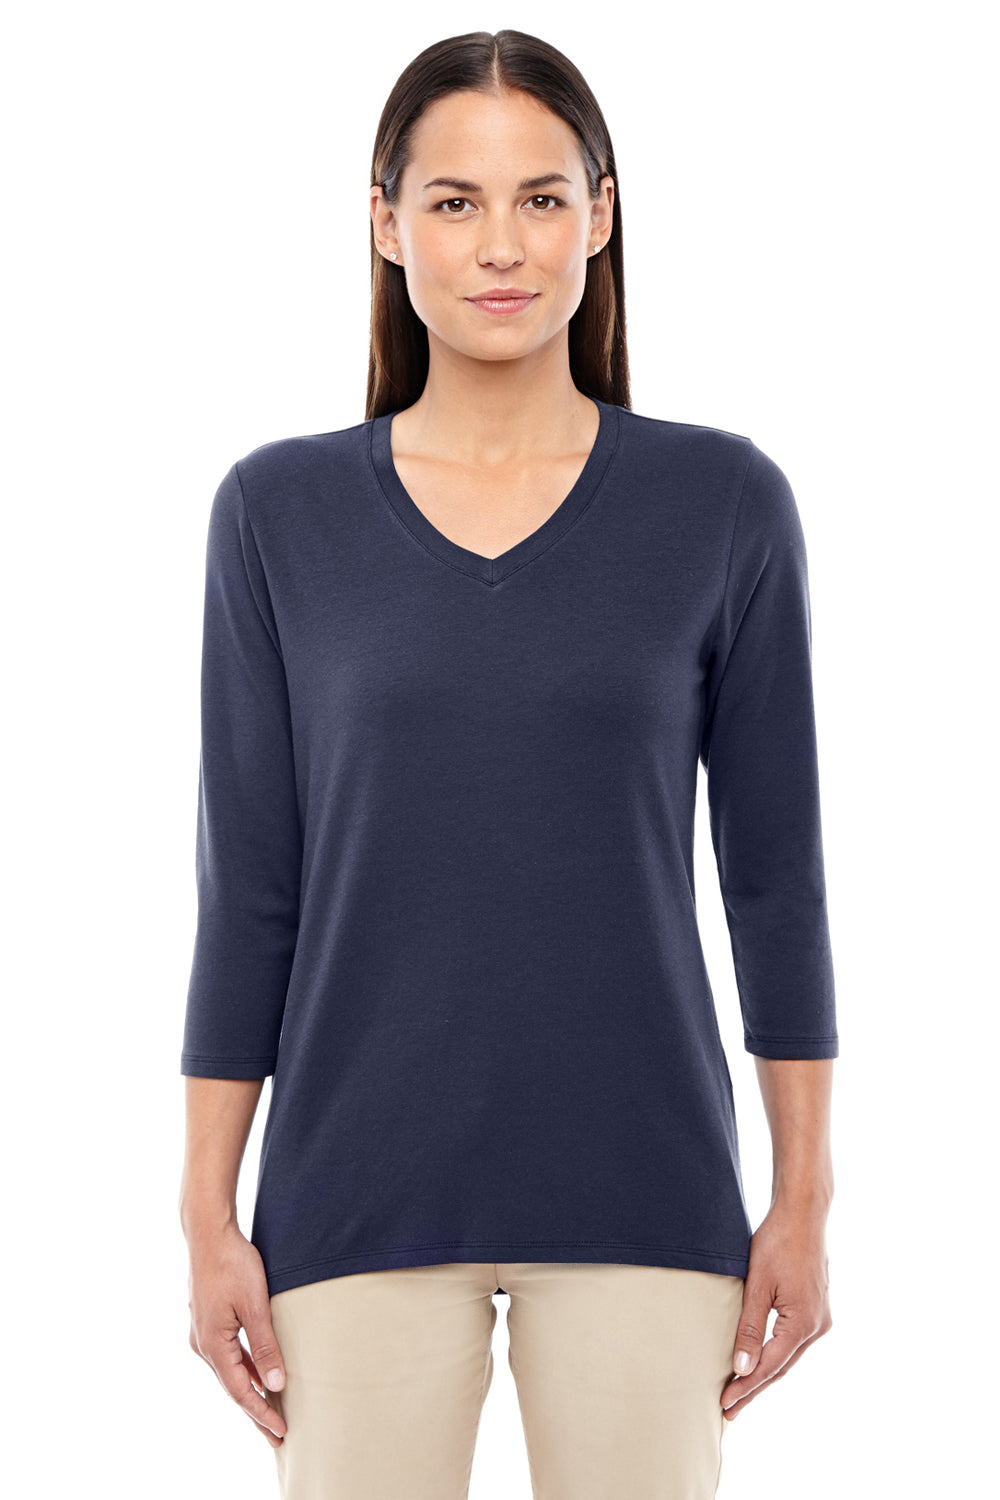 Devon & Jones DP184W Womens Perfect Fit 3/4 Sleeve V-Neck T-Shirt Navy Blue Front